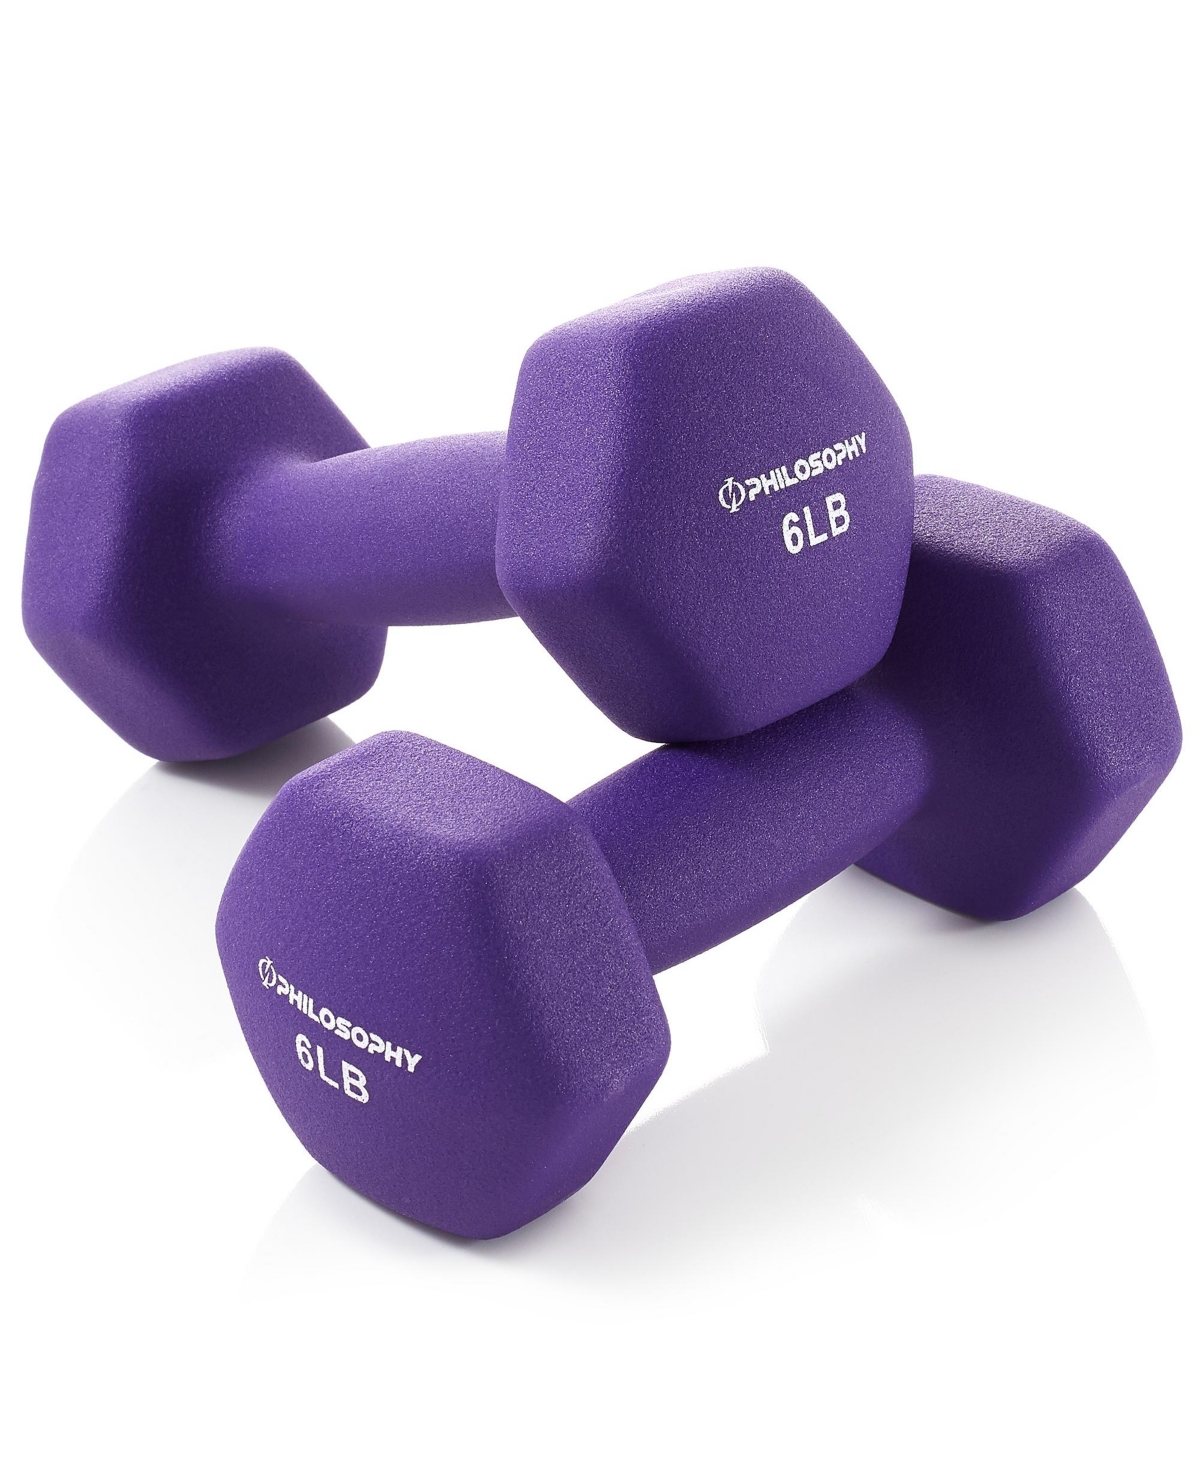 Neoprene Dumbbell Hexagon Hand Weights, 6 lb Pair - 12 lb Total - Purple